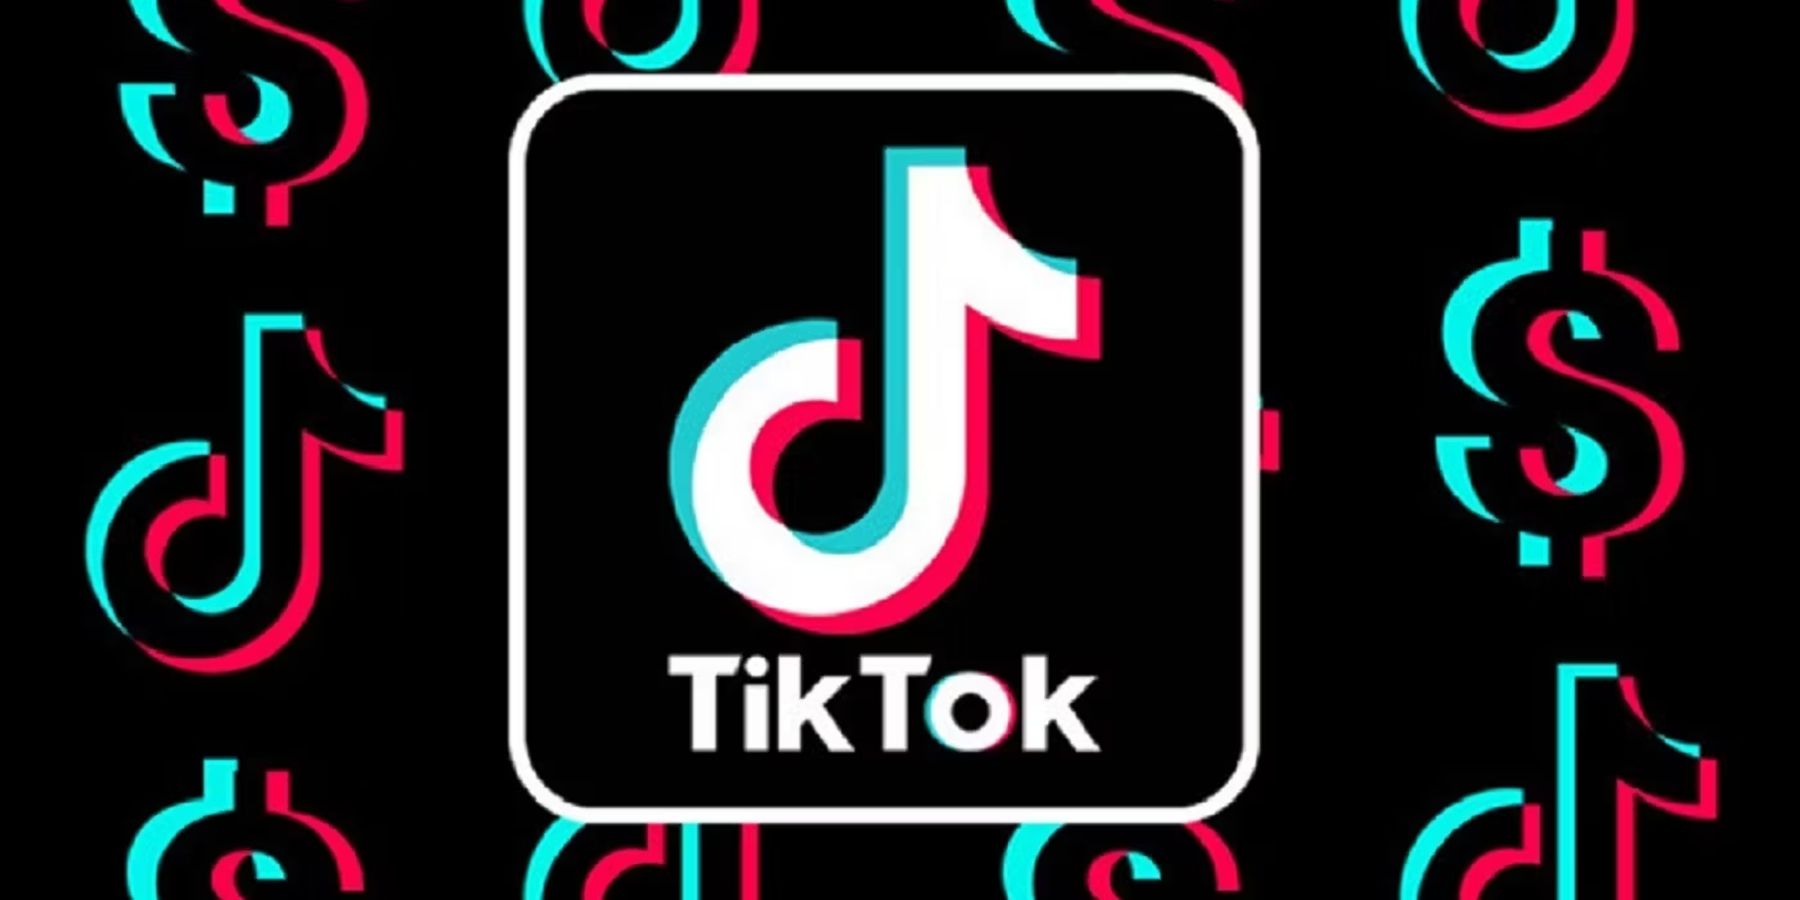 tiktok logo with dollar signs